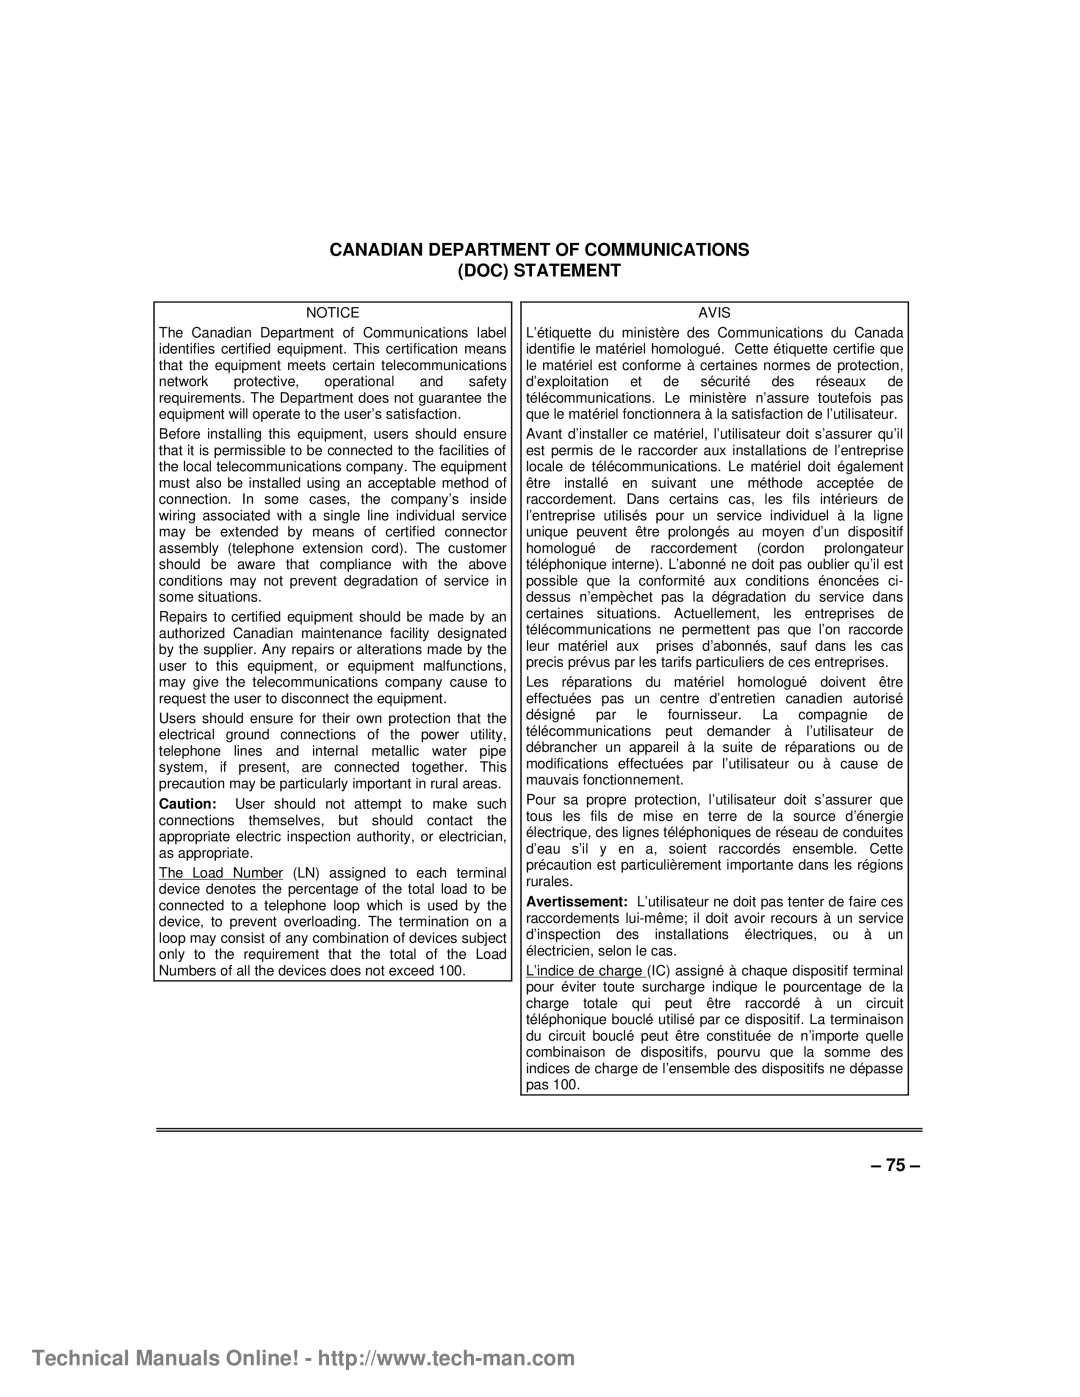 First Alert FA1600C/CA/CB, fa1600c technical manual Canadian Department Of Communications, Doc Statement 